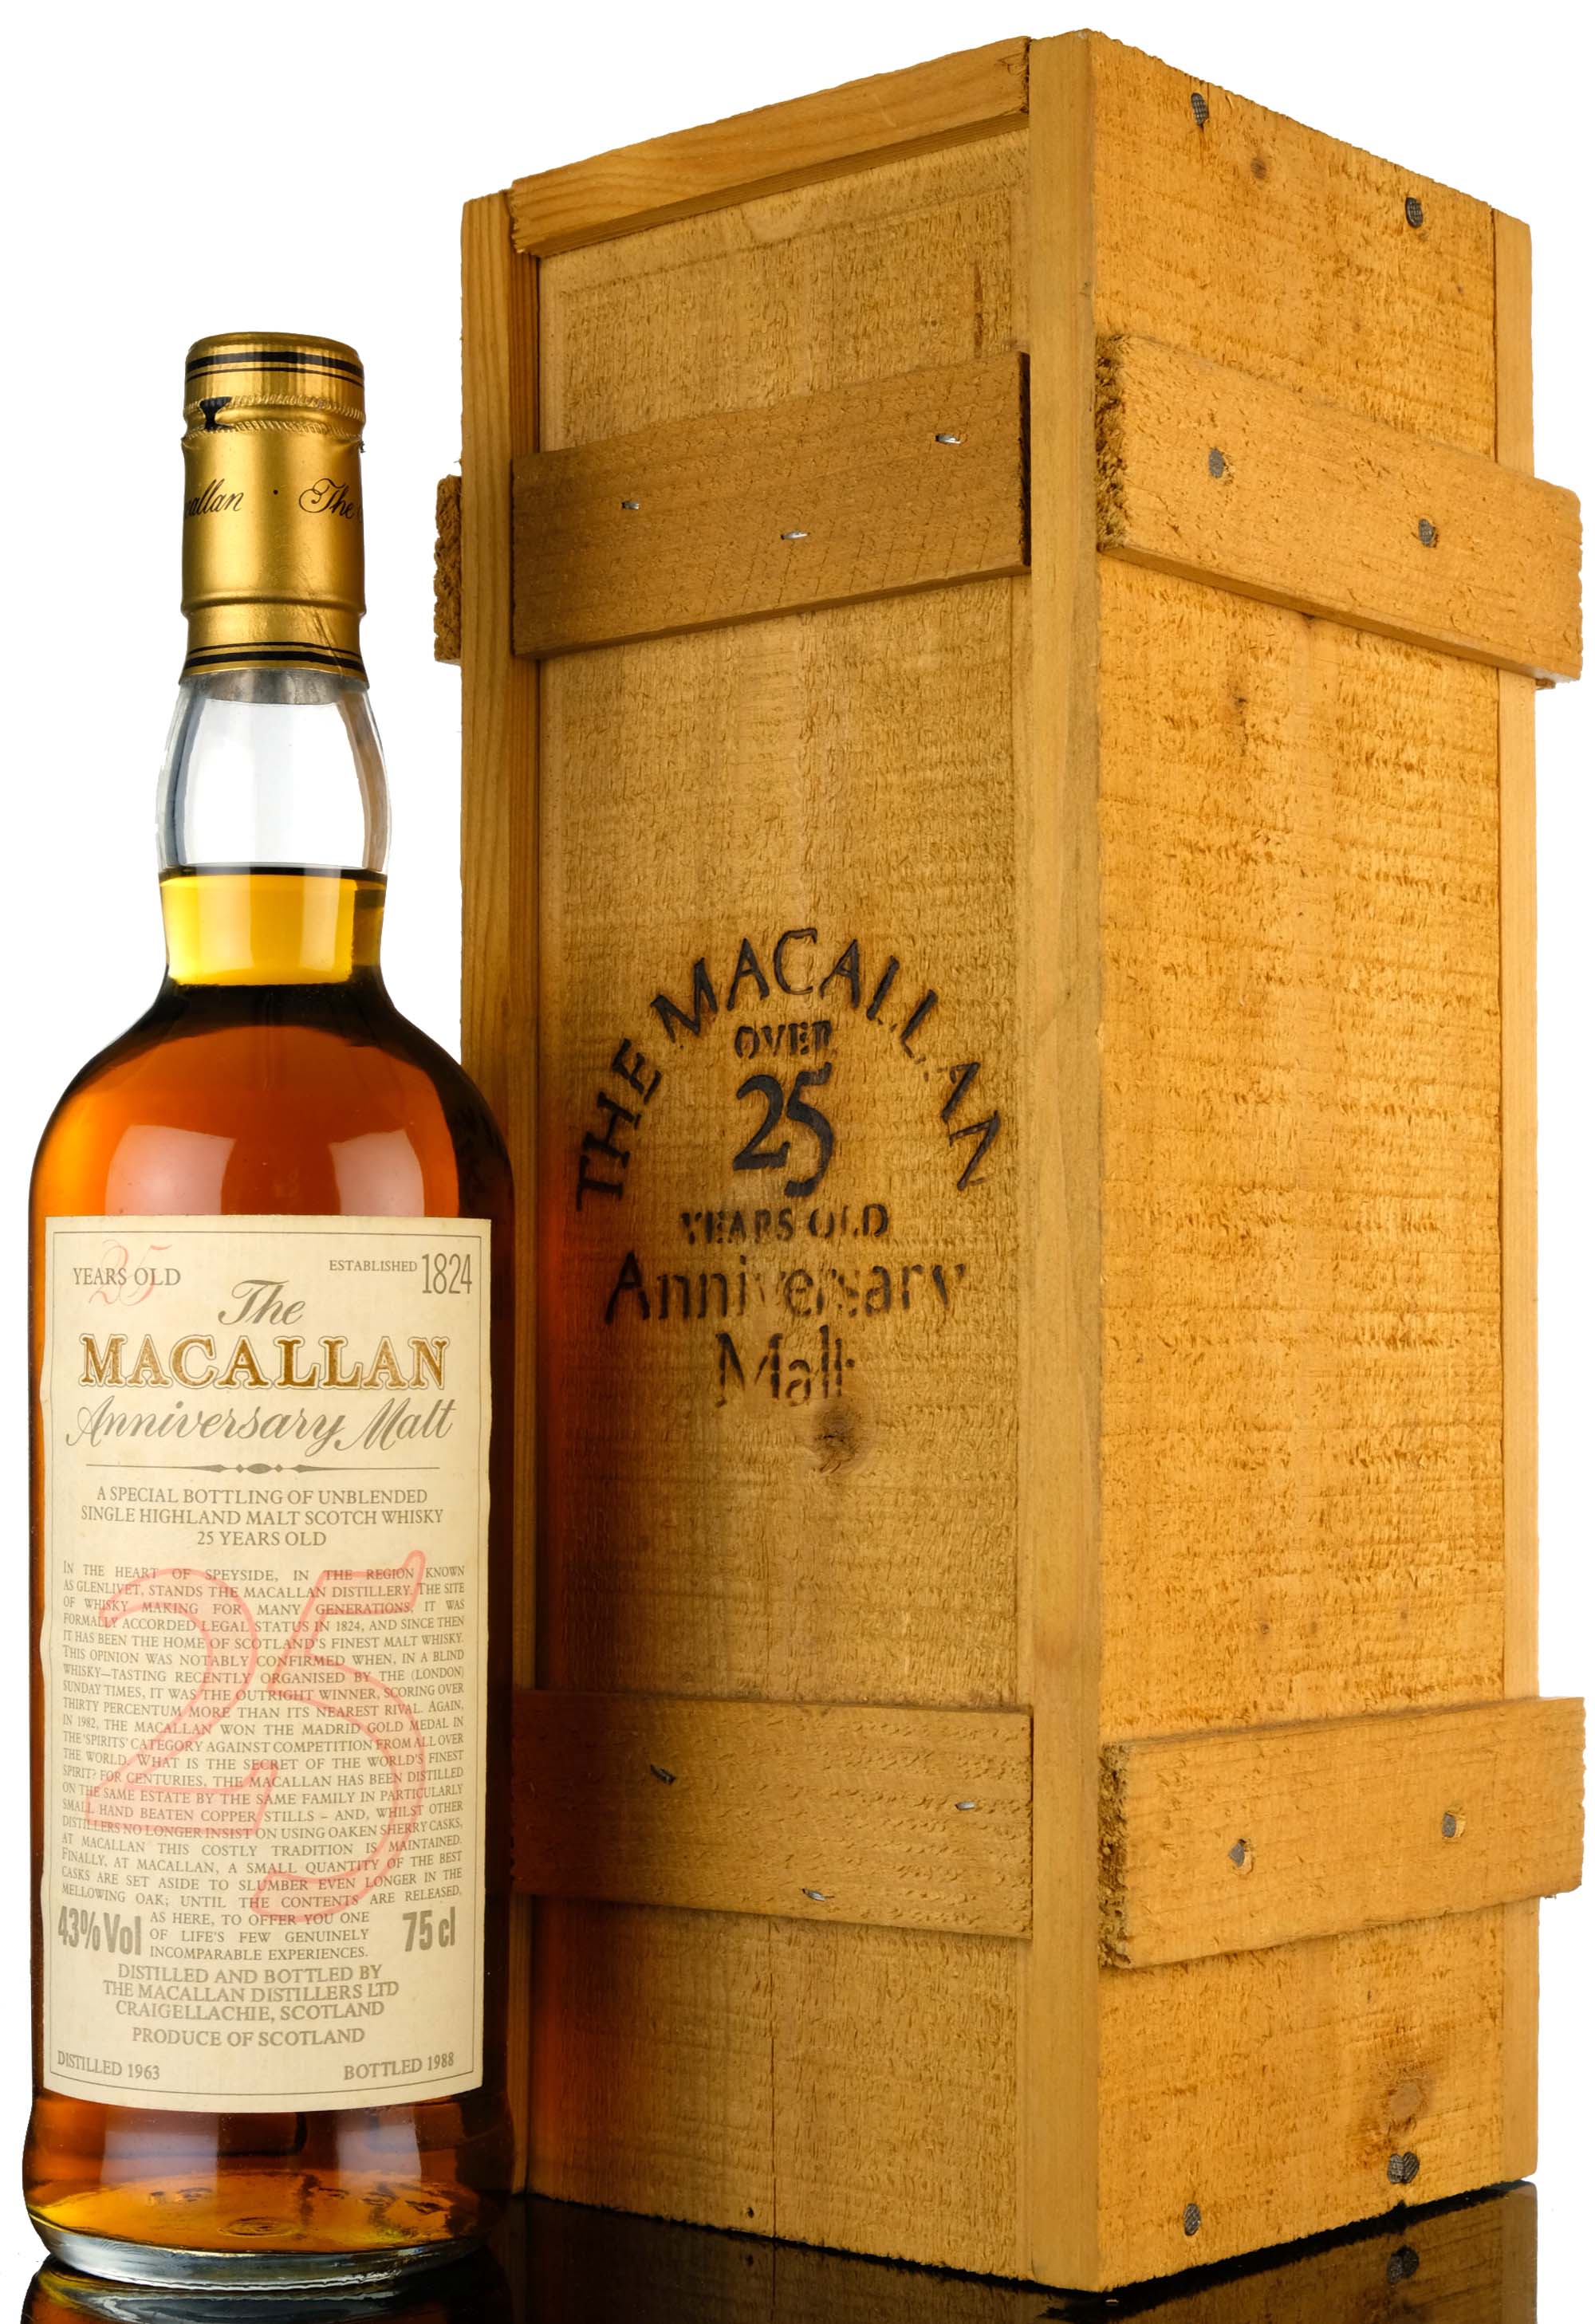 Macallan 1963-1988 - 25 Year Old - Anniversary Malt